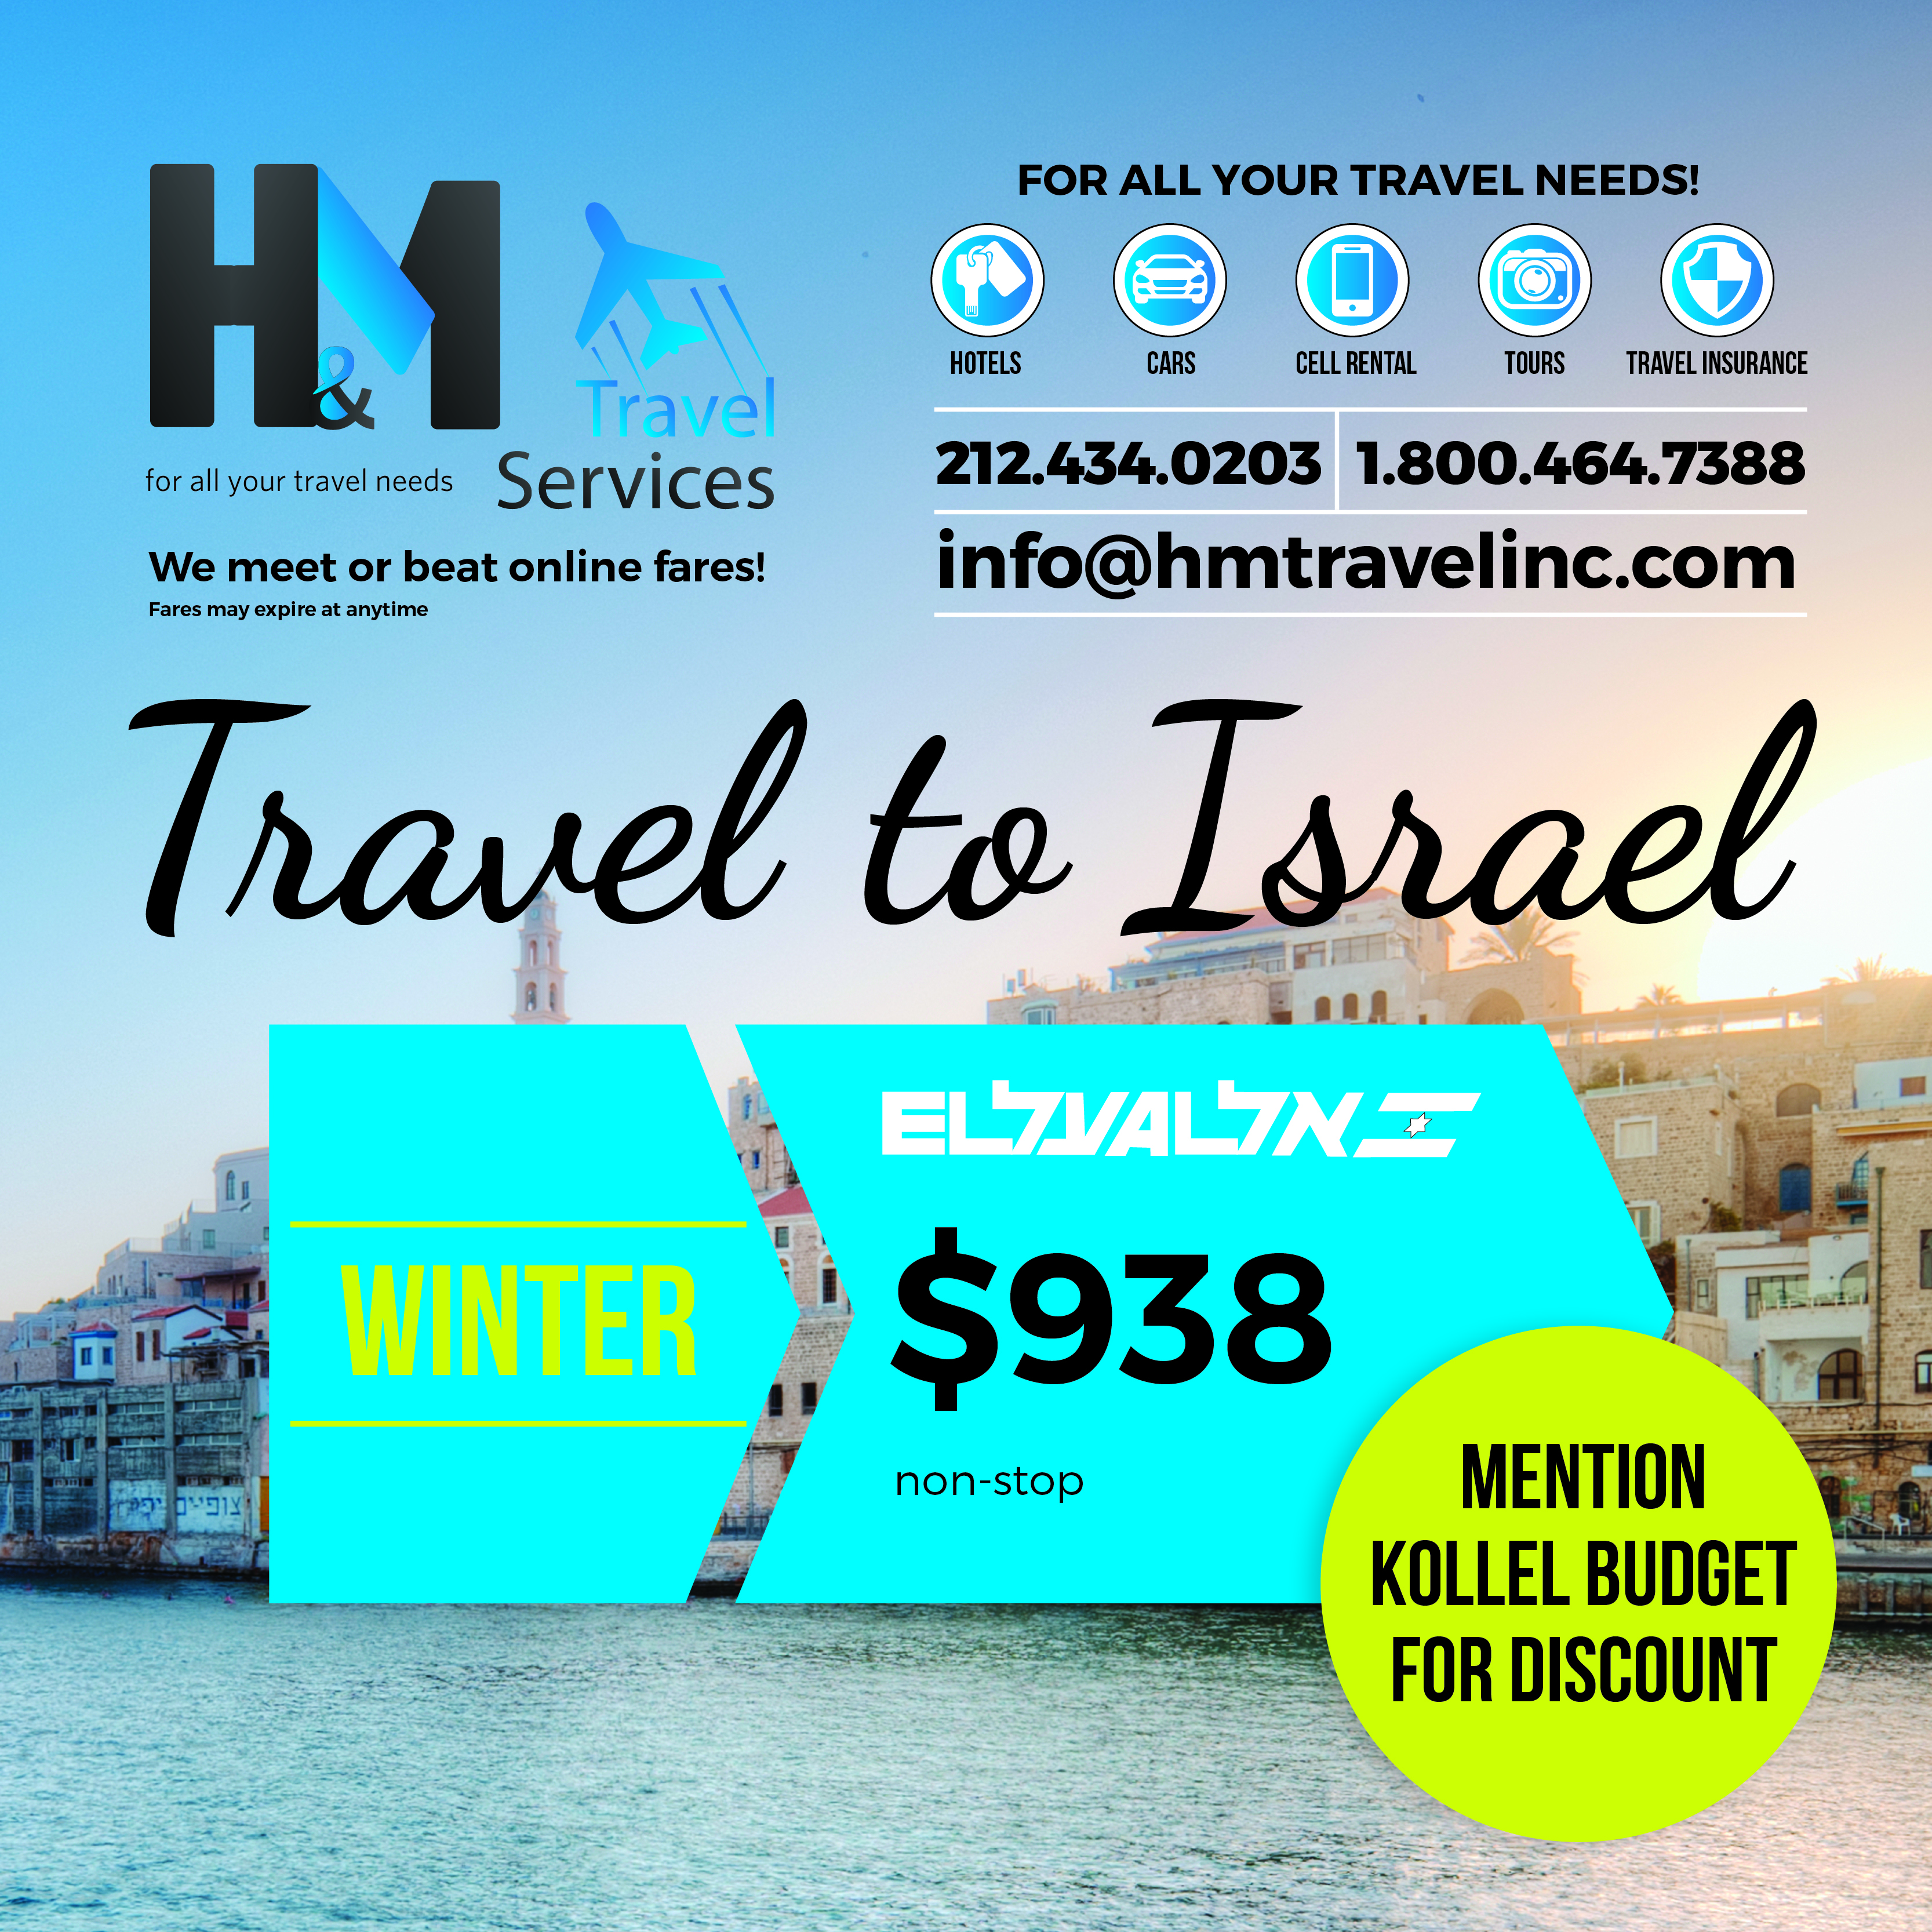 h & m travel services